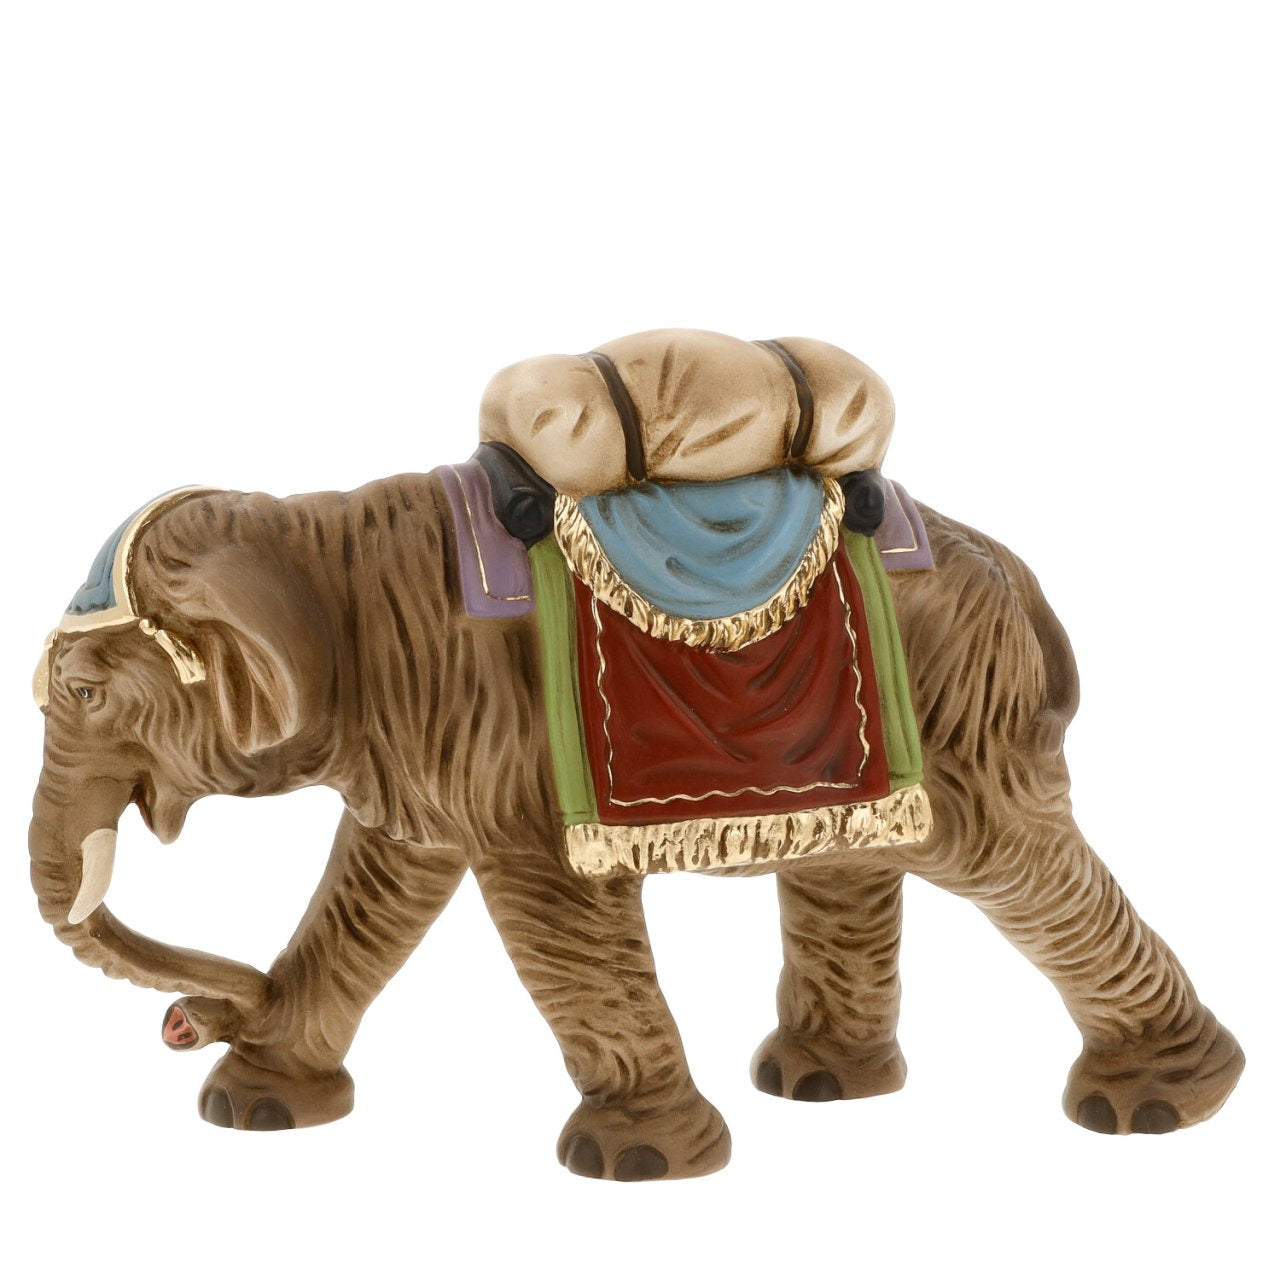 Elephant with luggage, 11-12cm scale by Marolin Manufaktur